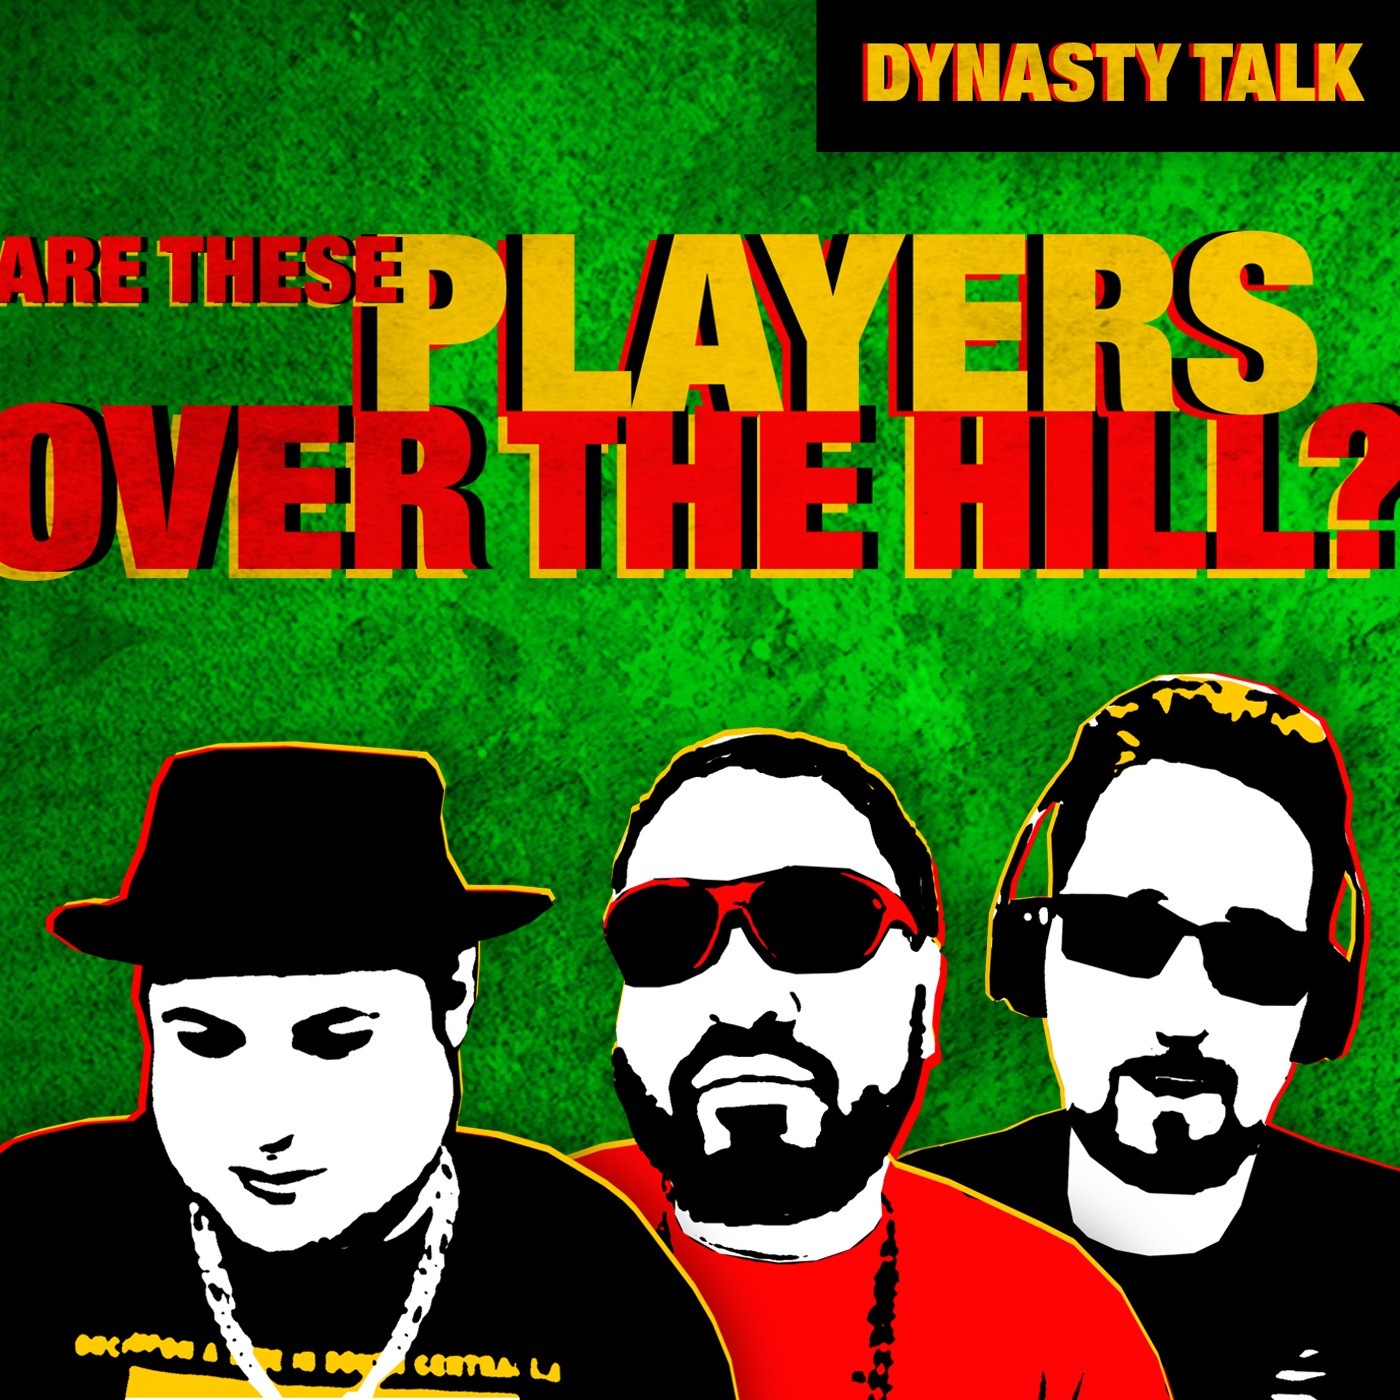 Over The Hill Dynasty Talk | Dynasty Fantasy Football Image